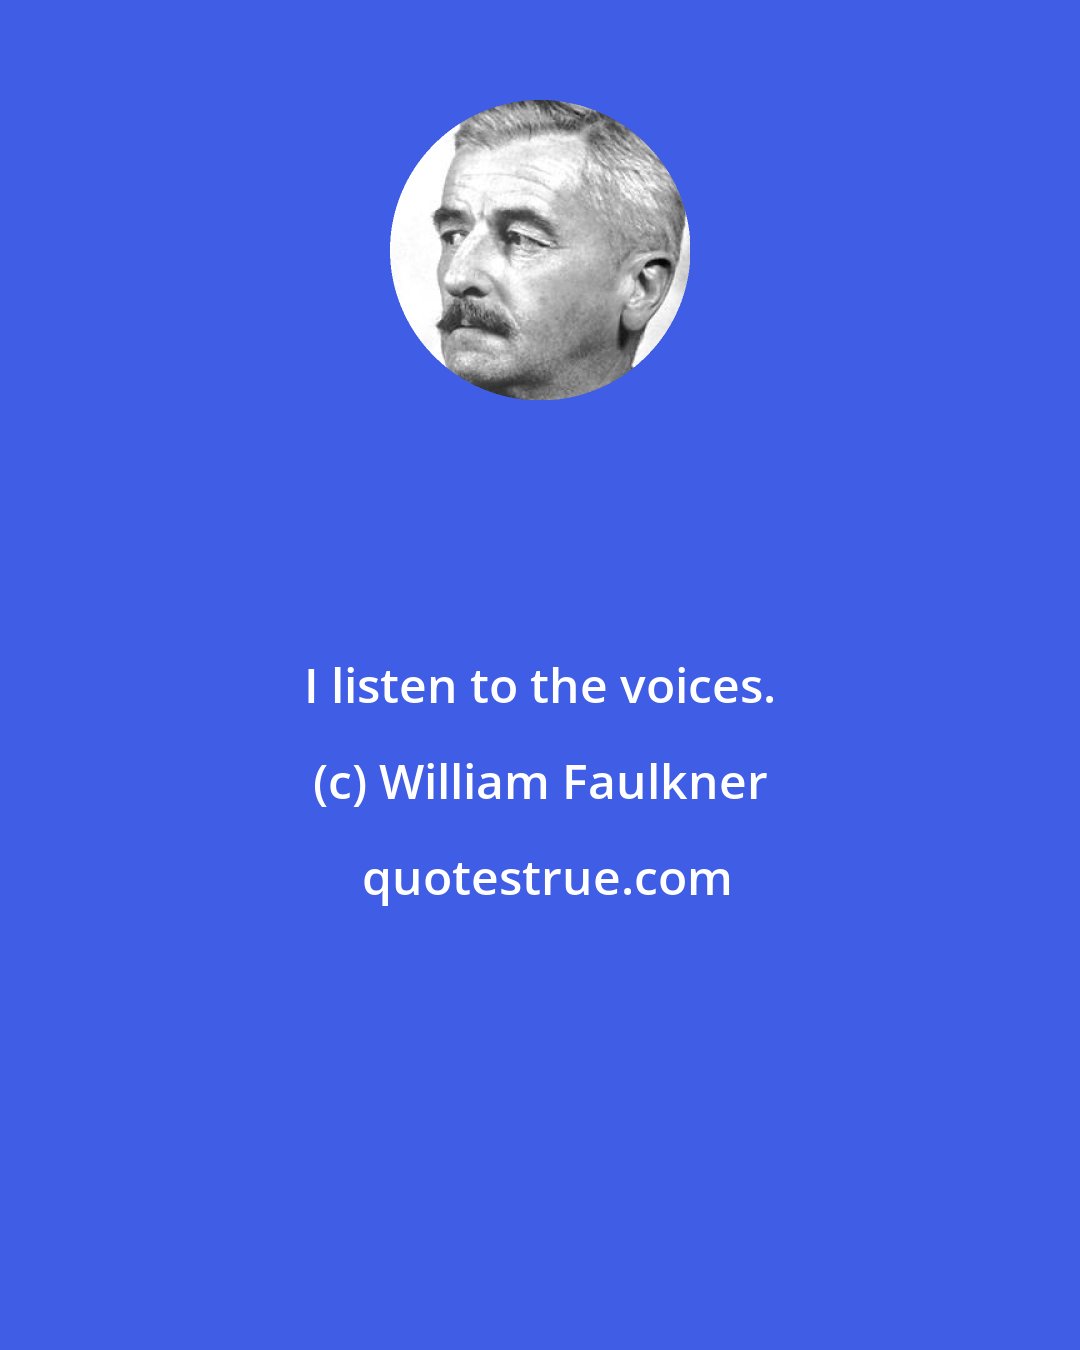 William Faulkner: I listen to the voices.